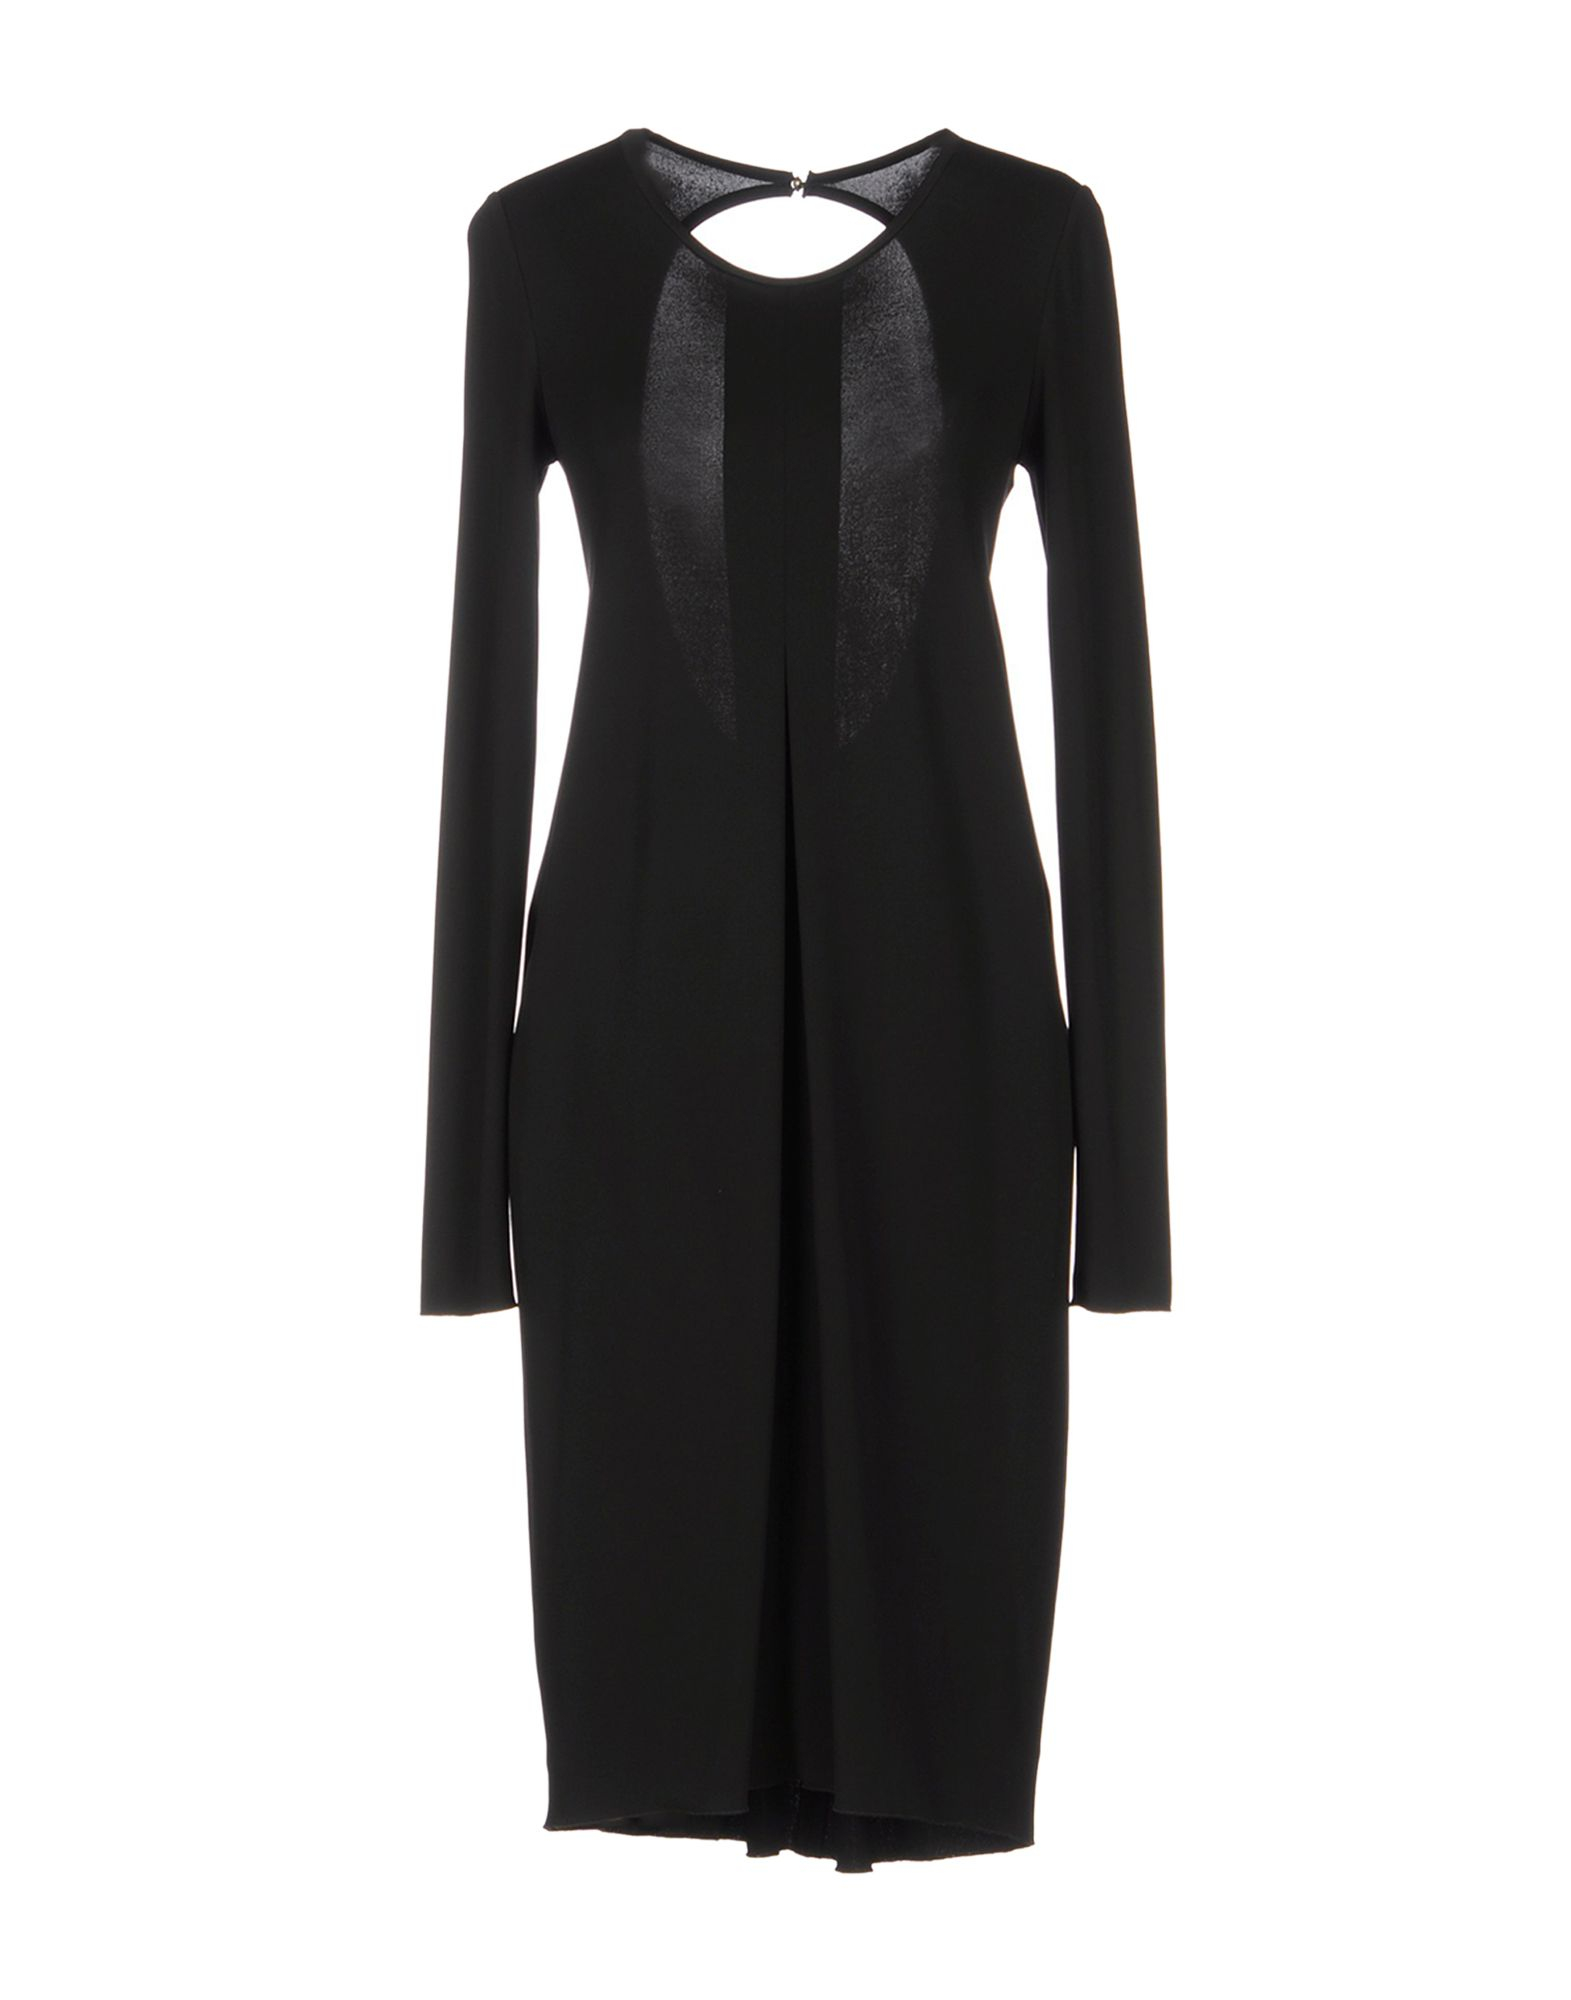 Yves Saint Laurent Rive Gauche Short Dress in Black | Lyst